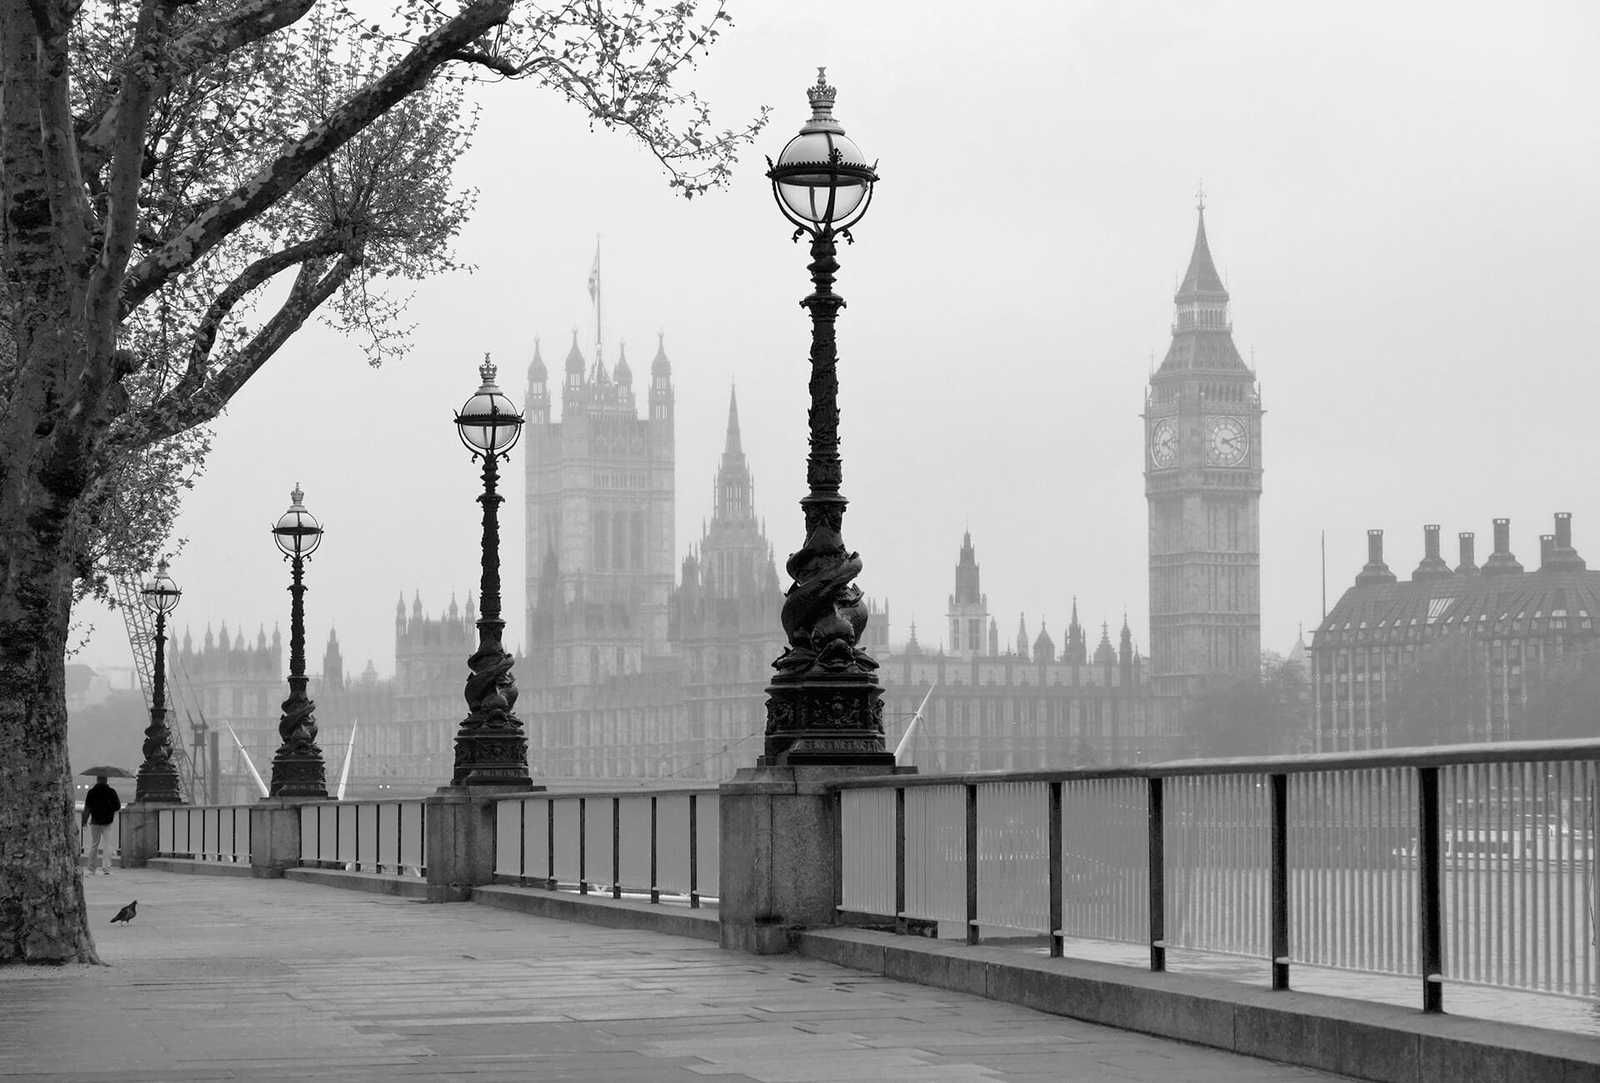         Photo wallpaper London in the fog - black, white, grey
    